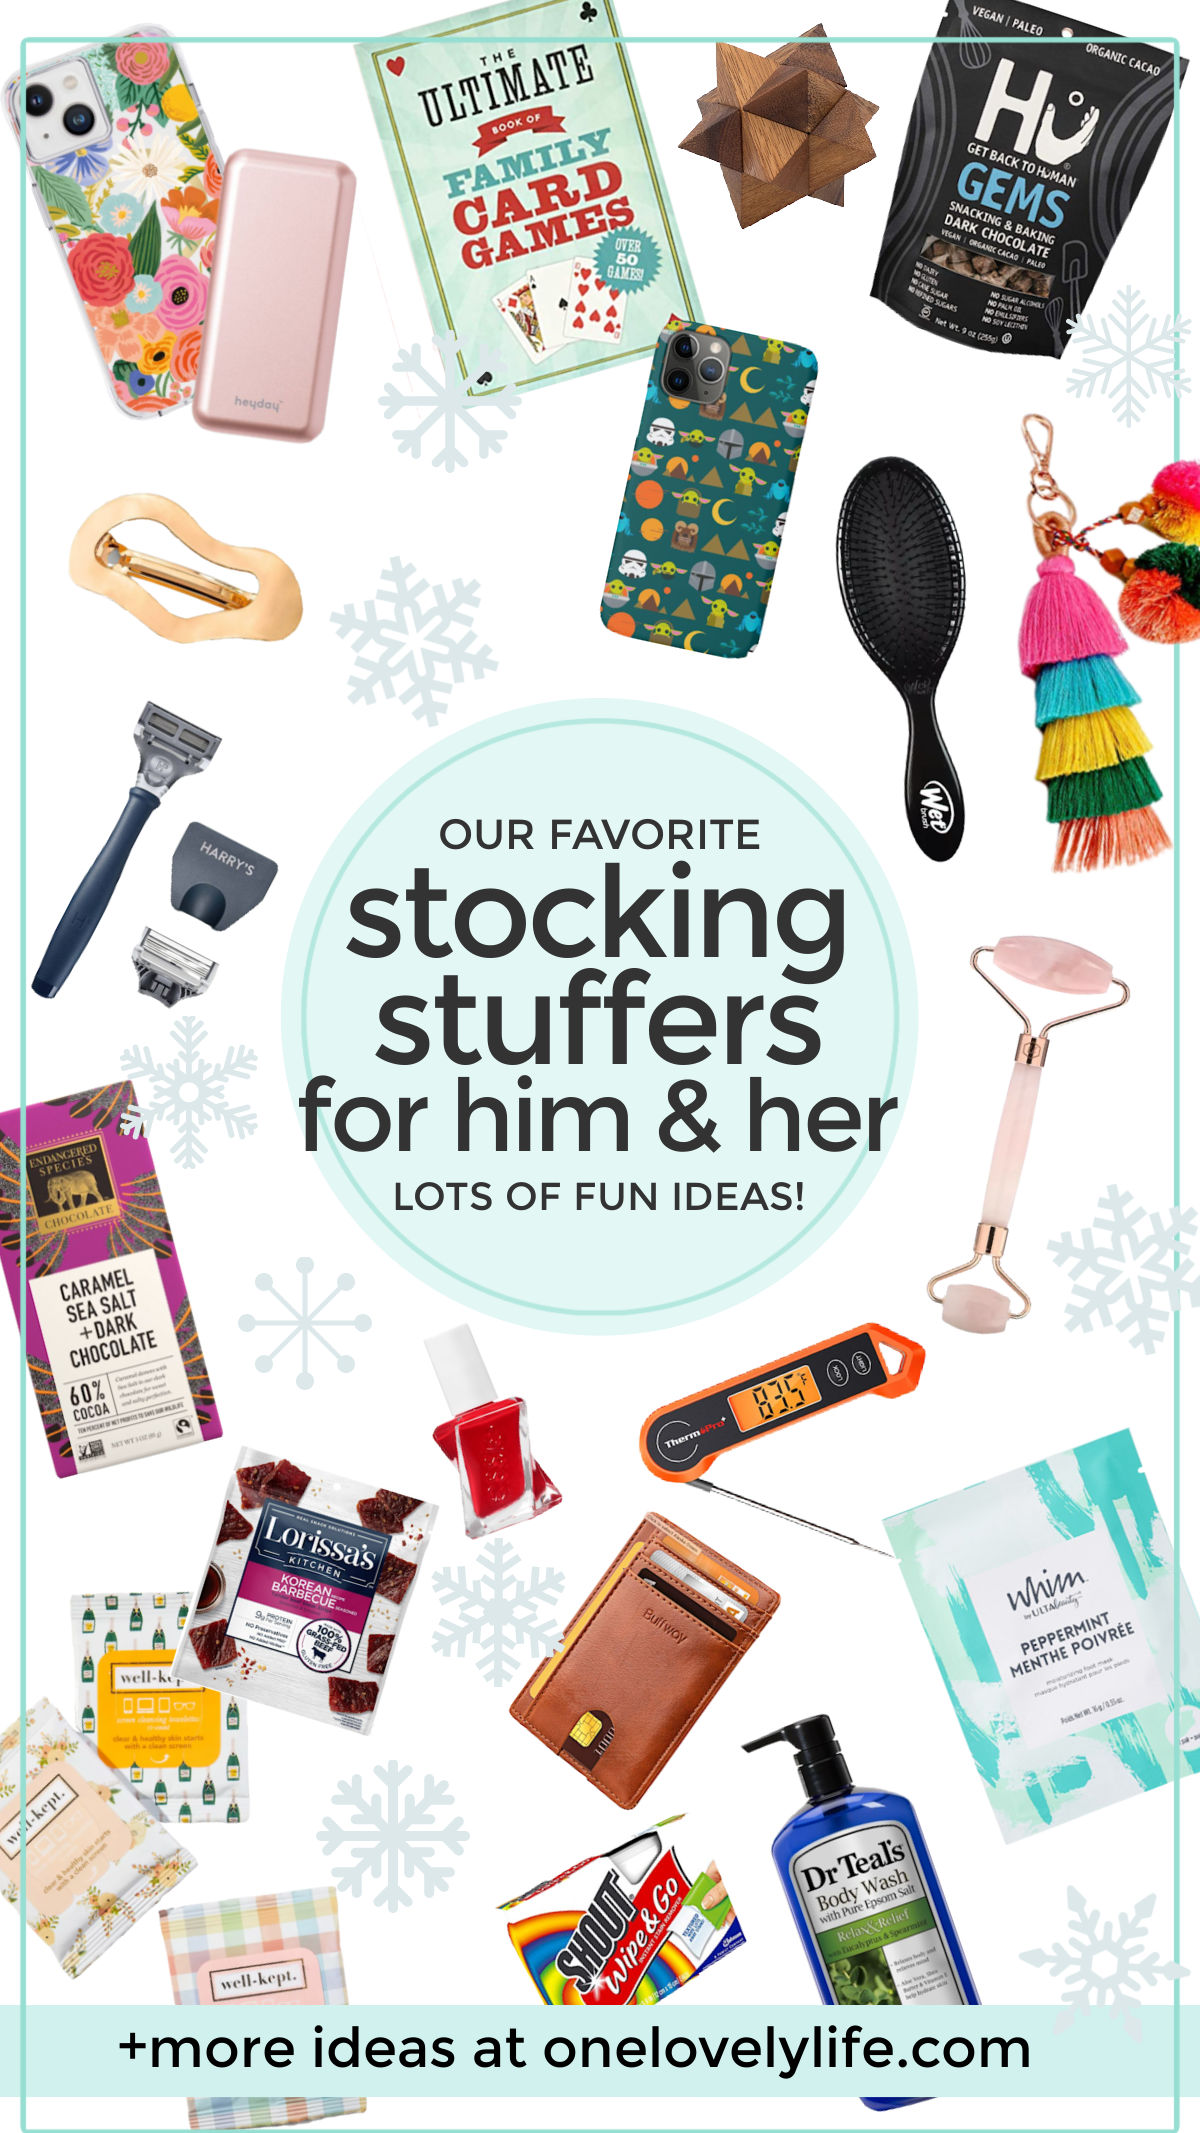 Stocking Stuffer Ideas For Guys, Husbands, boyfriends, sons and teens